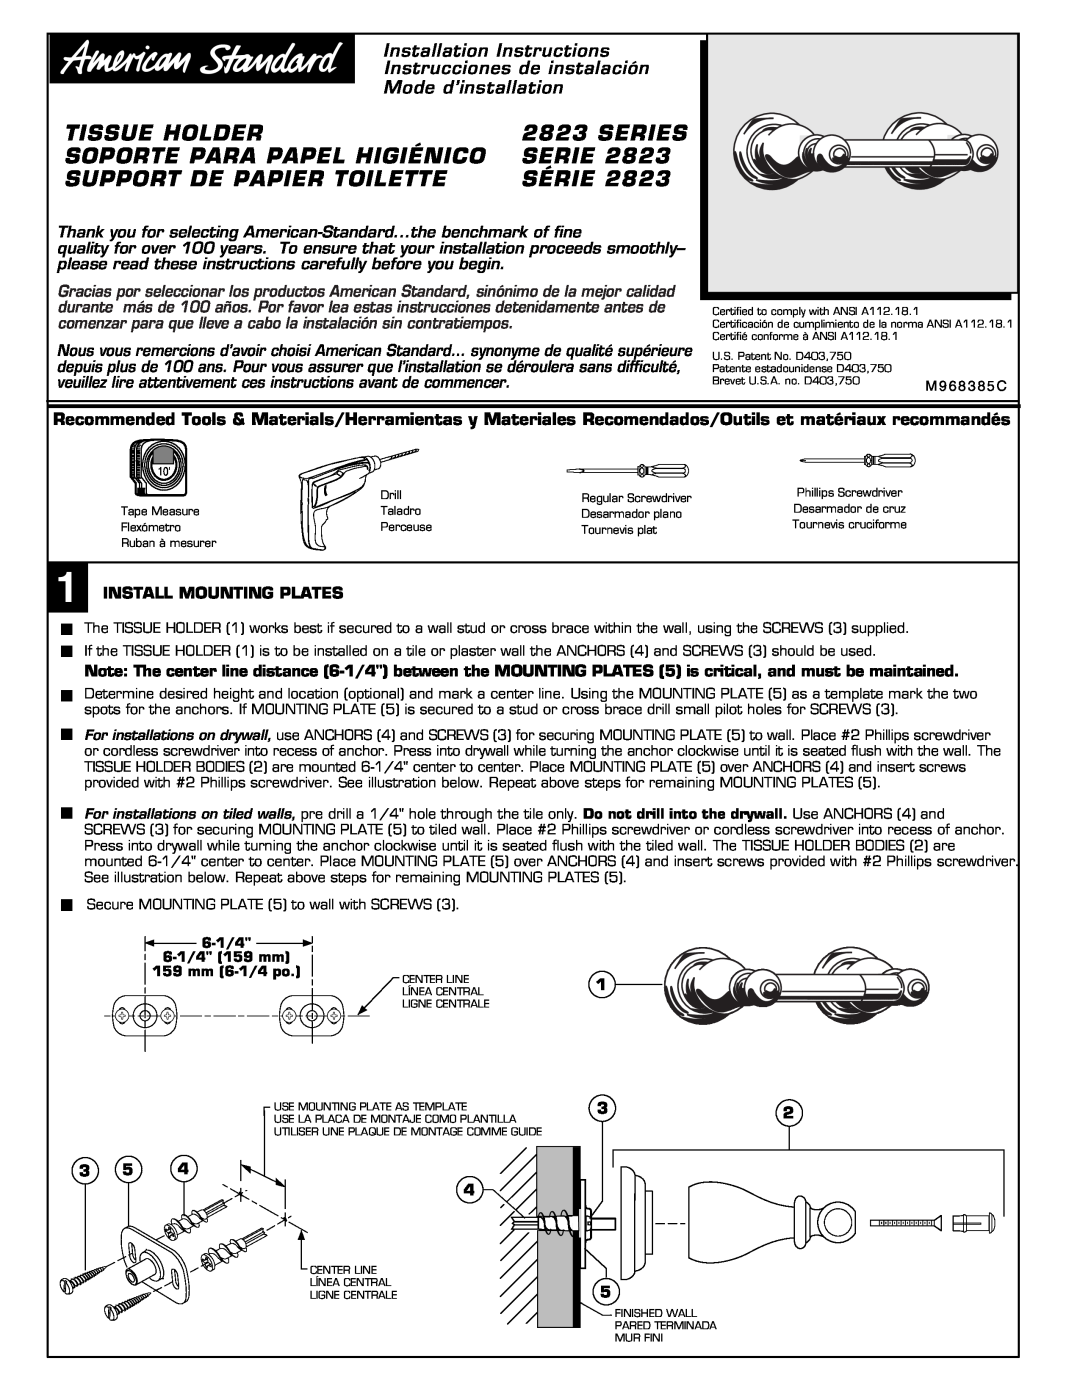 American Standard 2823 installation instructions Tissue Holder, Series, Soporte Para Papel Higiénico, Série 